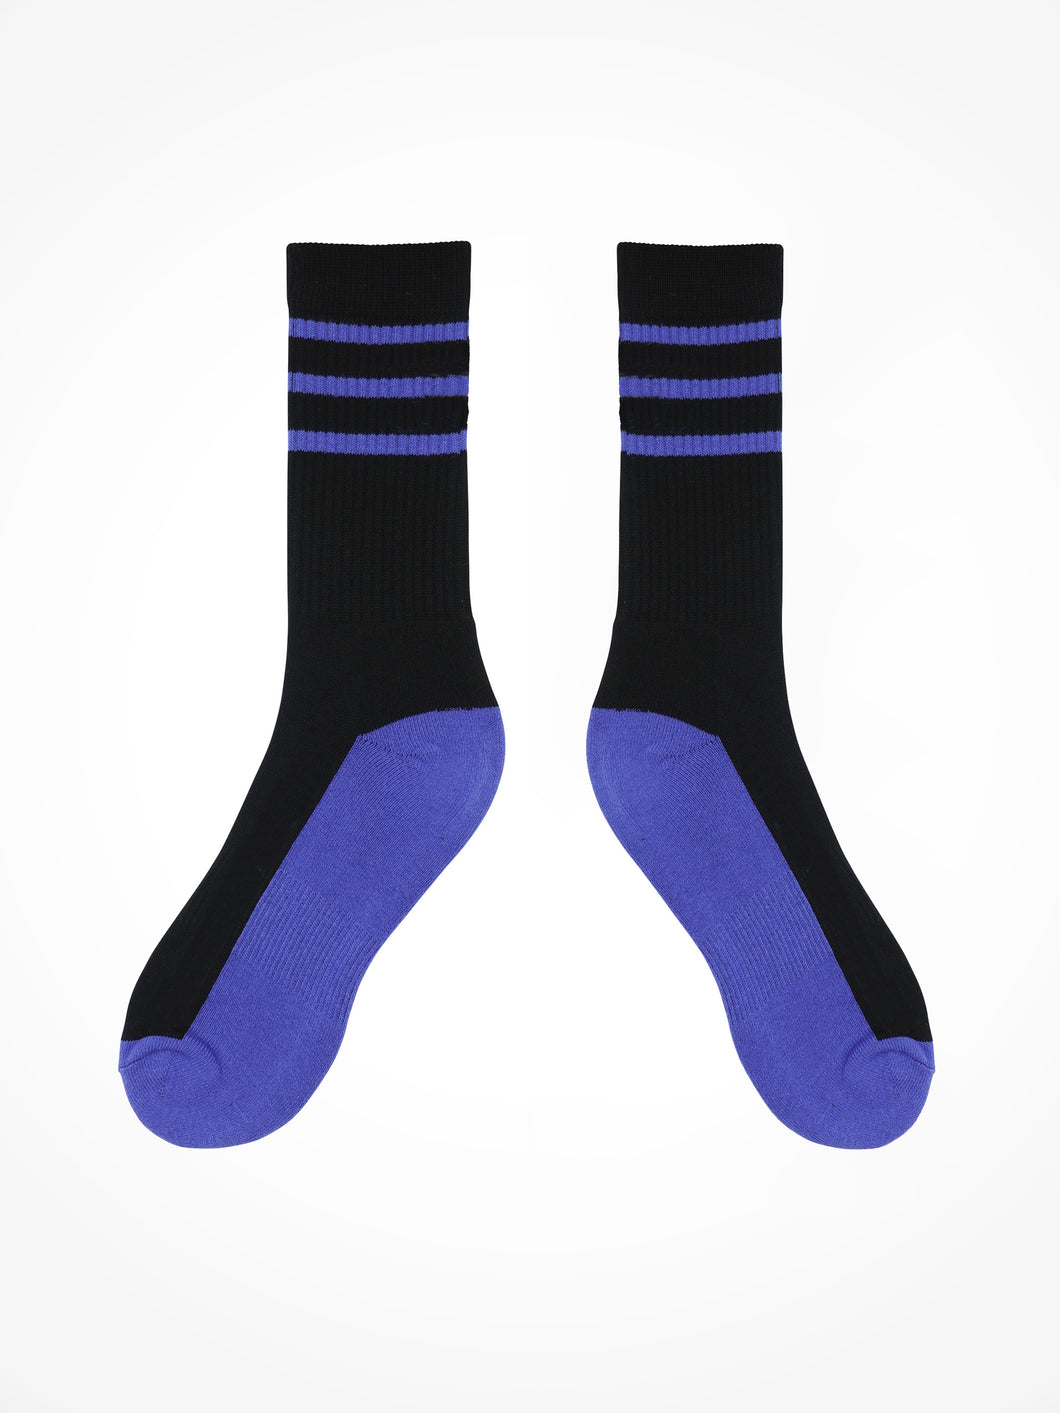 Black and Blue Socks